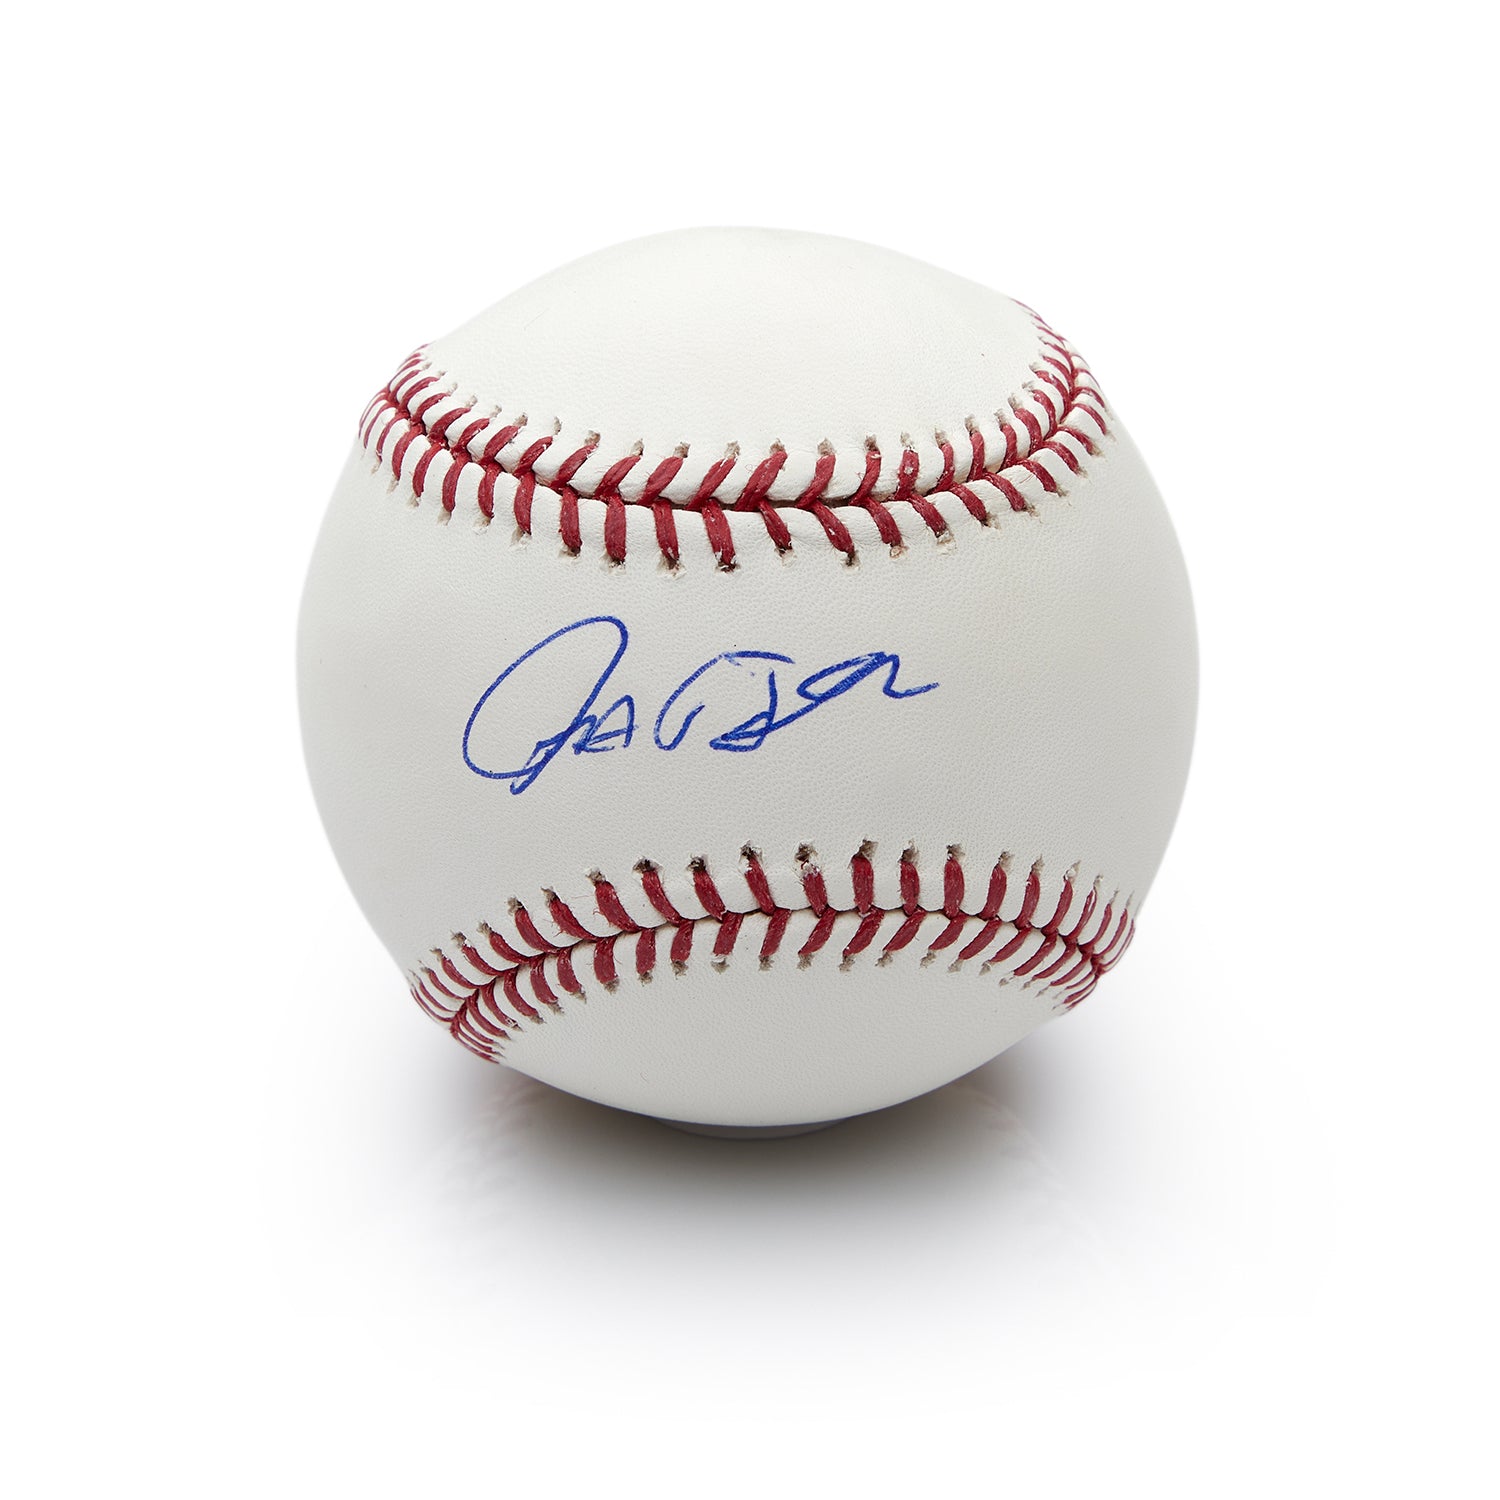 Josh Donaldson Autographed Official Rawlings MLB Baseball